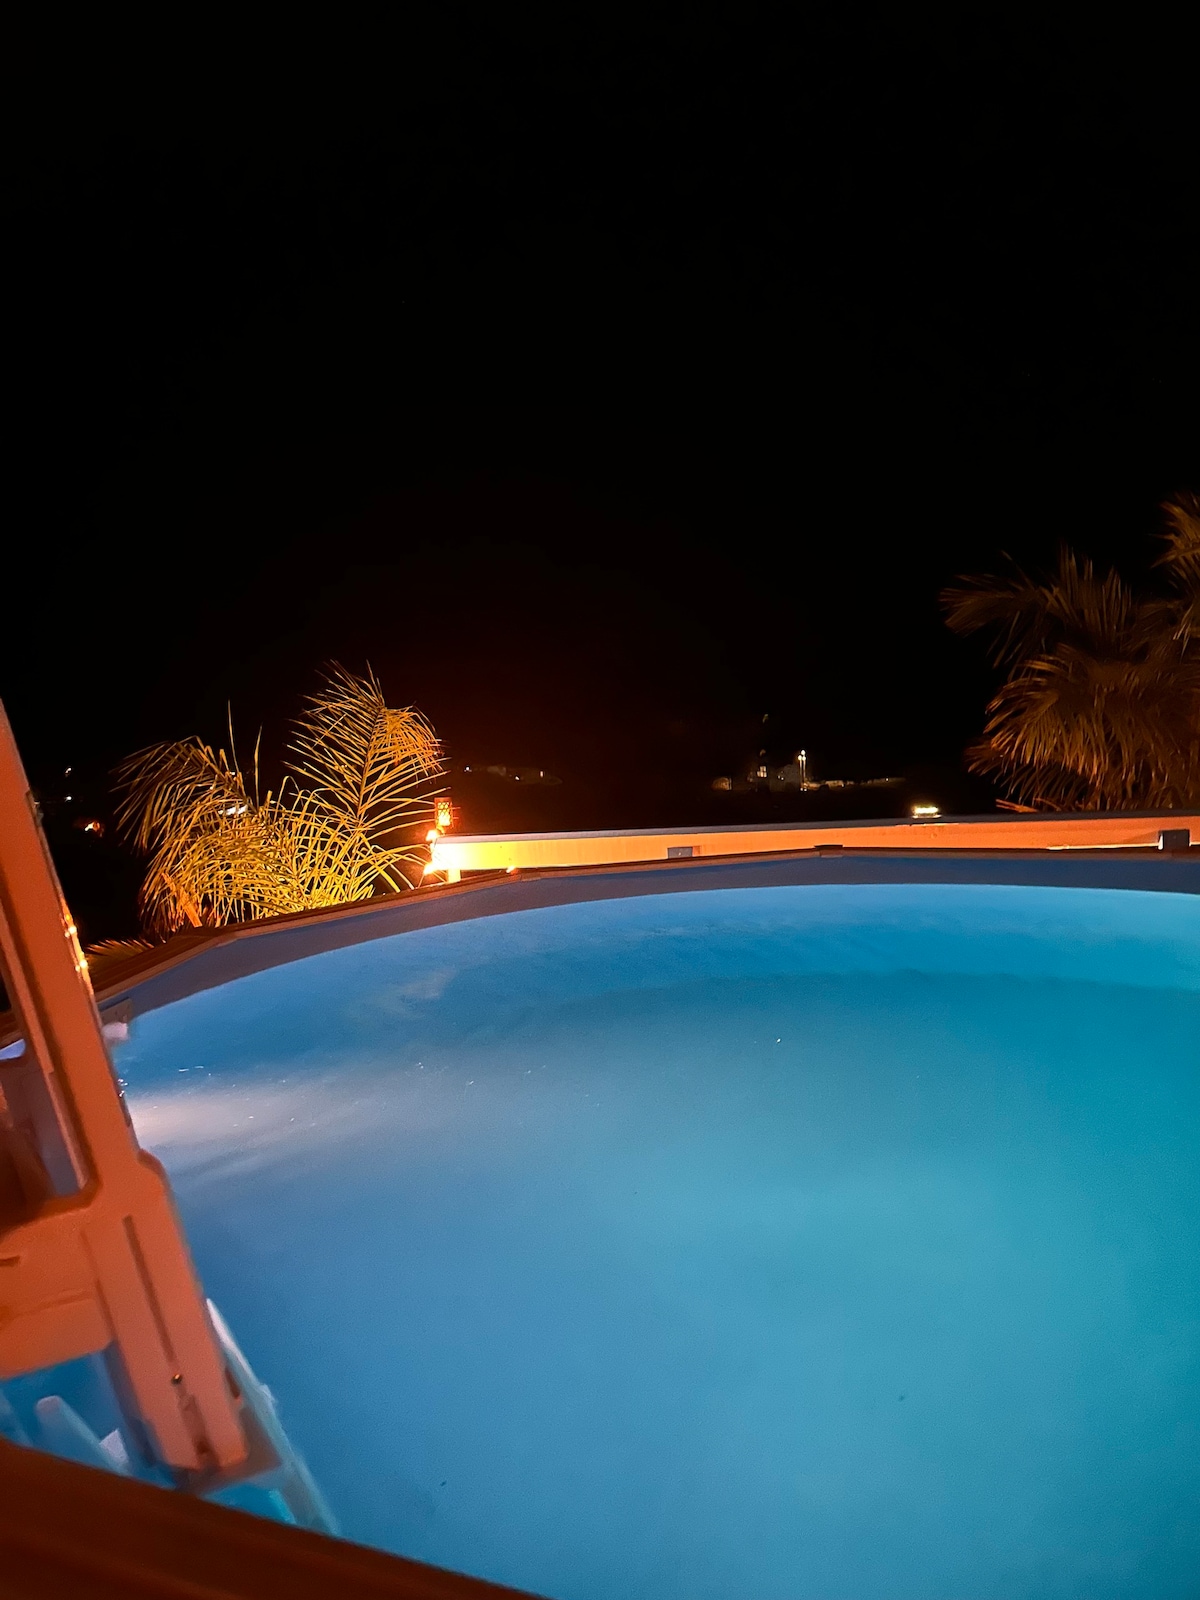 Casa Diaz Stay-, Apt   Private Pool & Ocean View